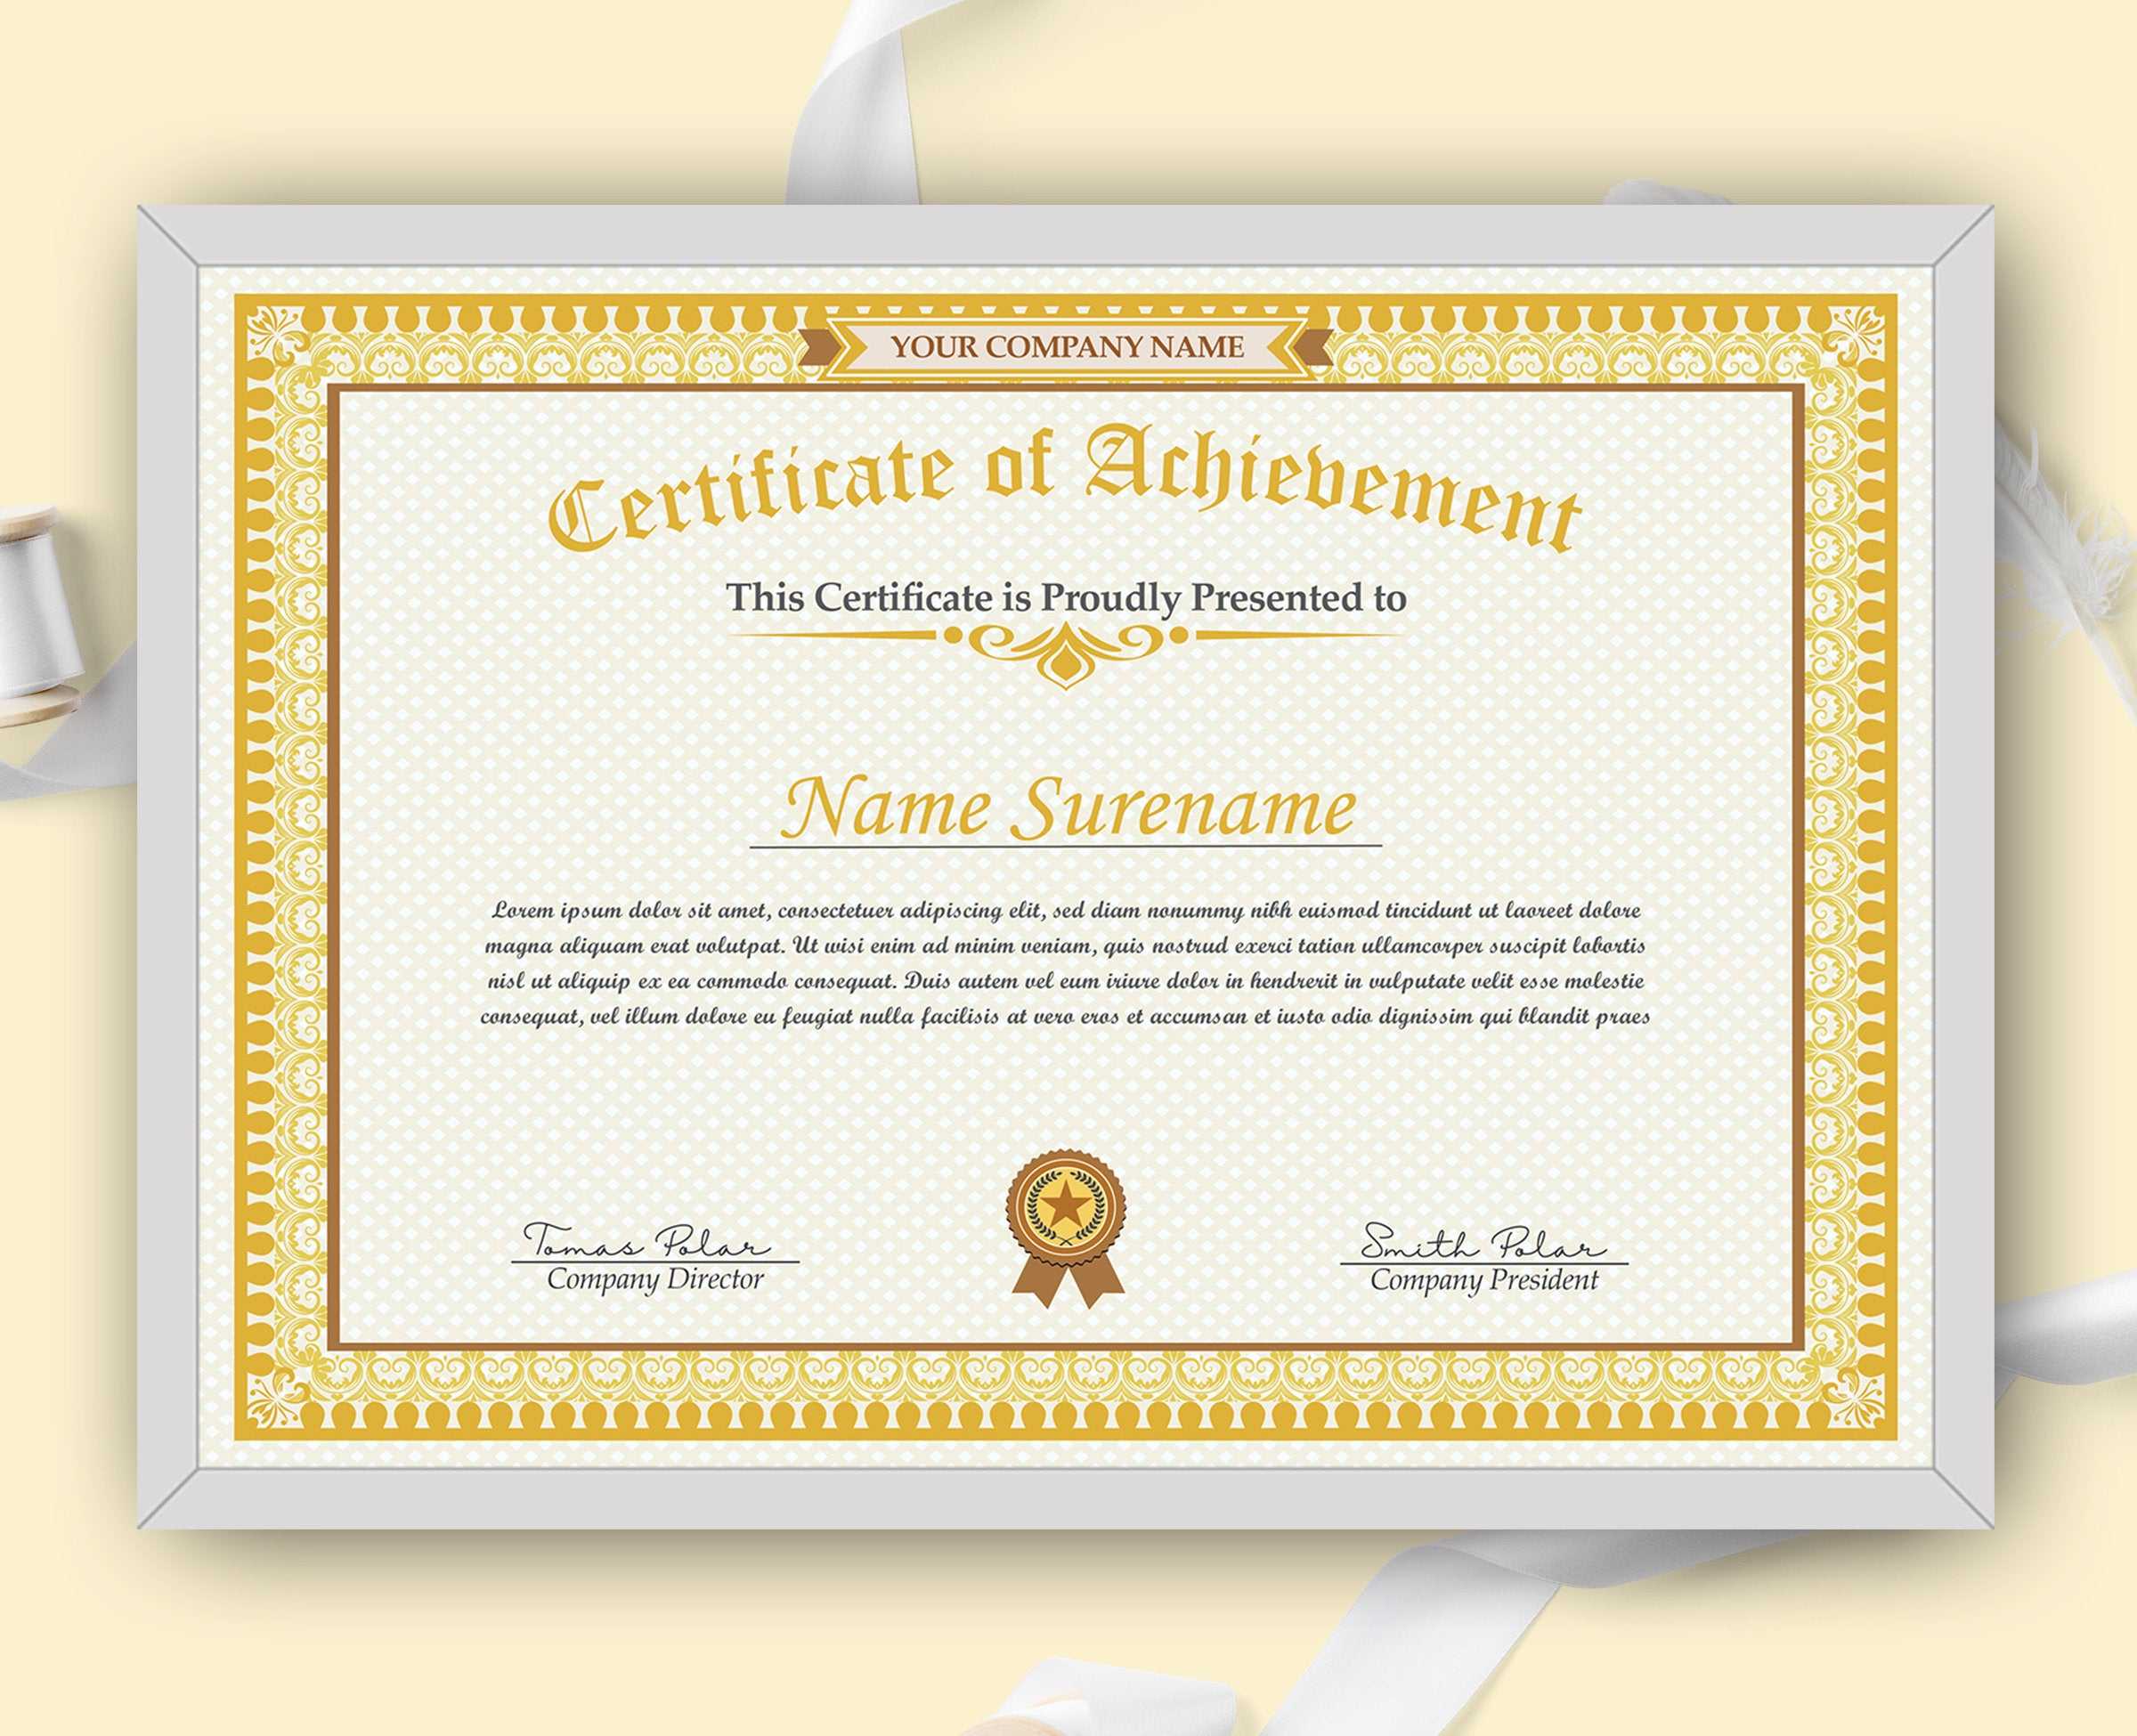 Multipurpose Certificate Template | Printable Certificate Template |  Microsoft Word & Illustrator Template | Instant Download In Borderless Certificate Templates